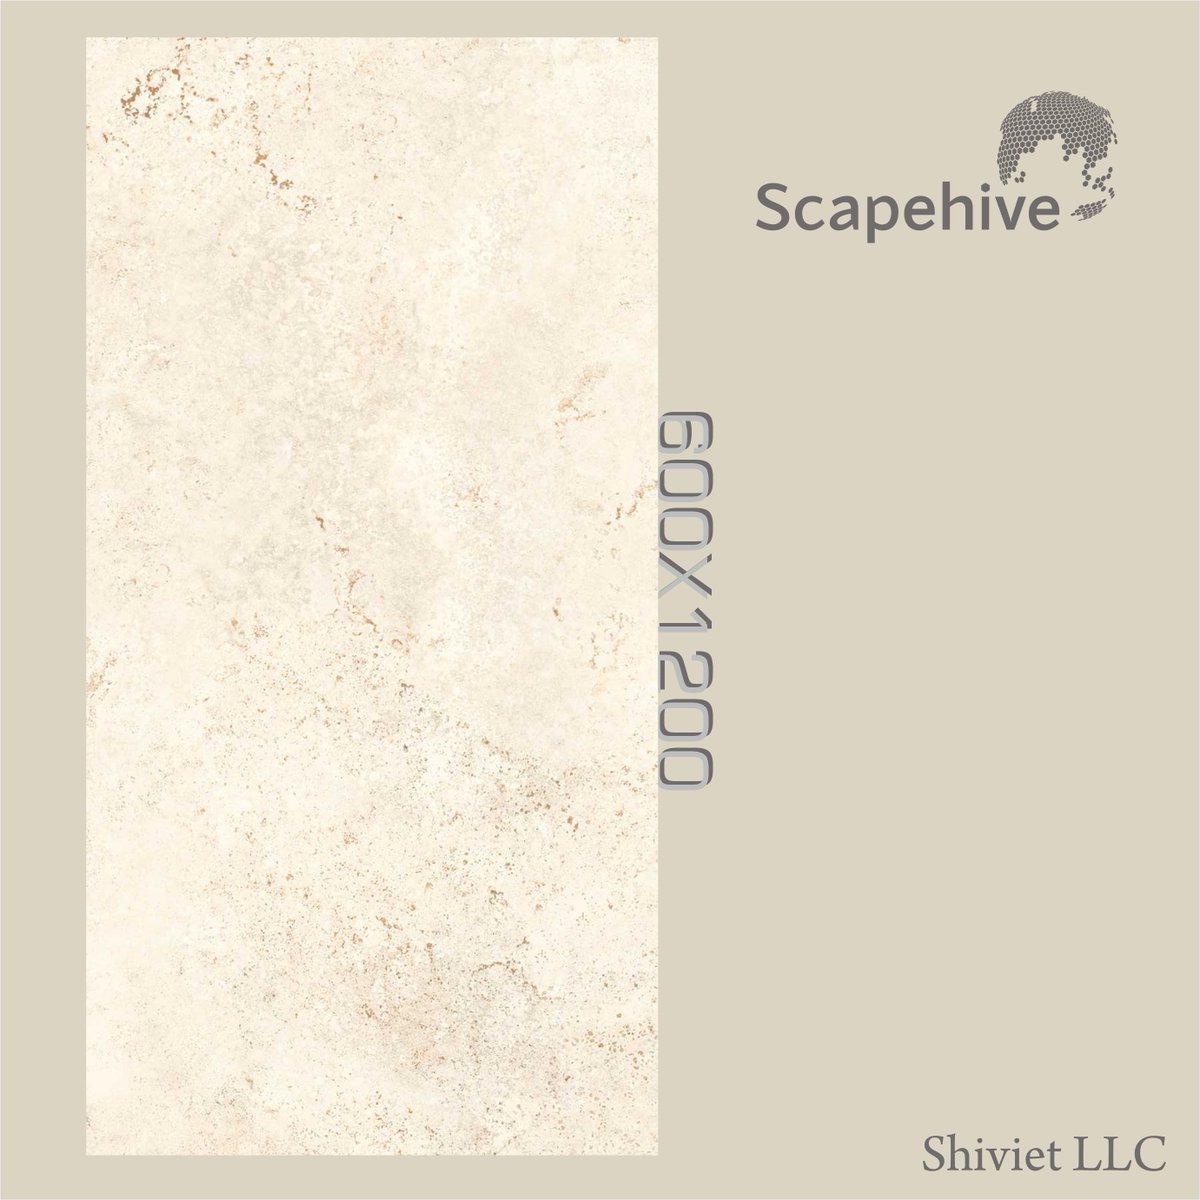 One step solution for your porcelain tile needs
Available Design: SANDSTONE CREMA
Size : 600x1200mm
Surface : MATT
#Scapehive #floortiles #PGVT #porcelaintiles #shiviet #vitrifiedtiles
#tiles